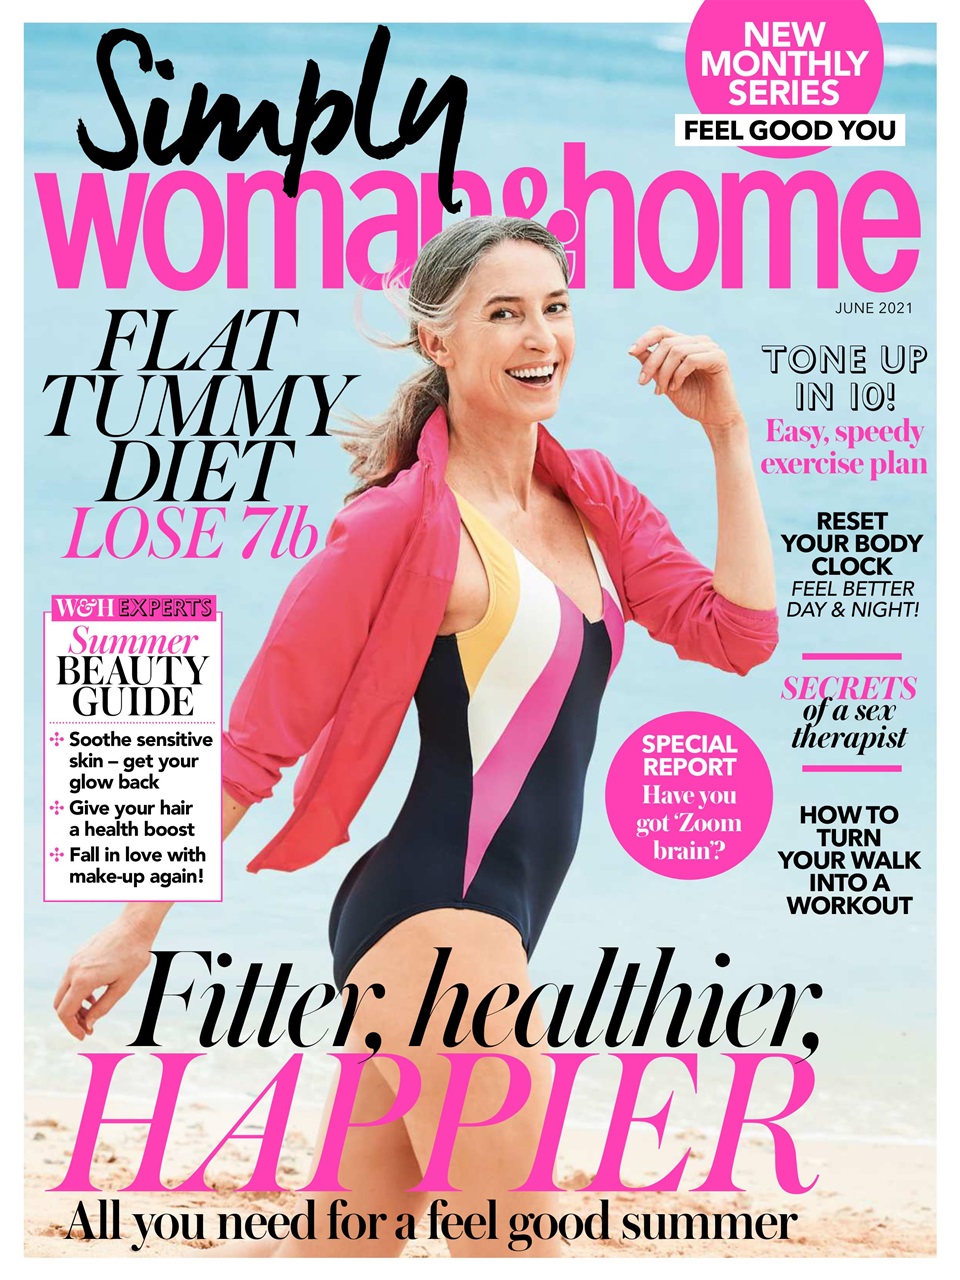 Woman&Home Feel Good You Magazine - Jun-2021 Back Issue